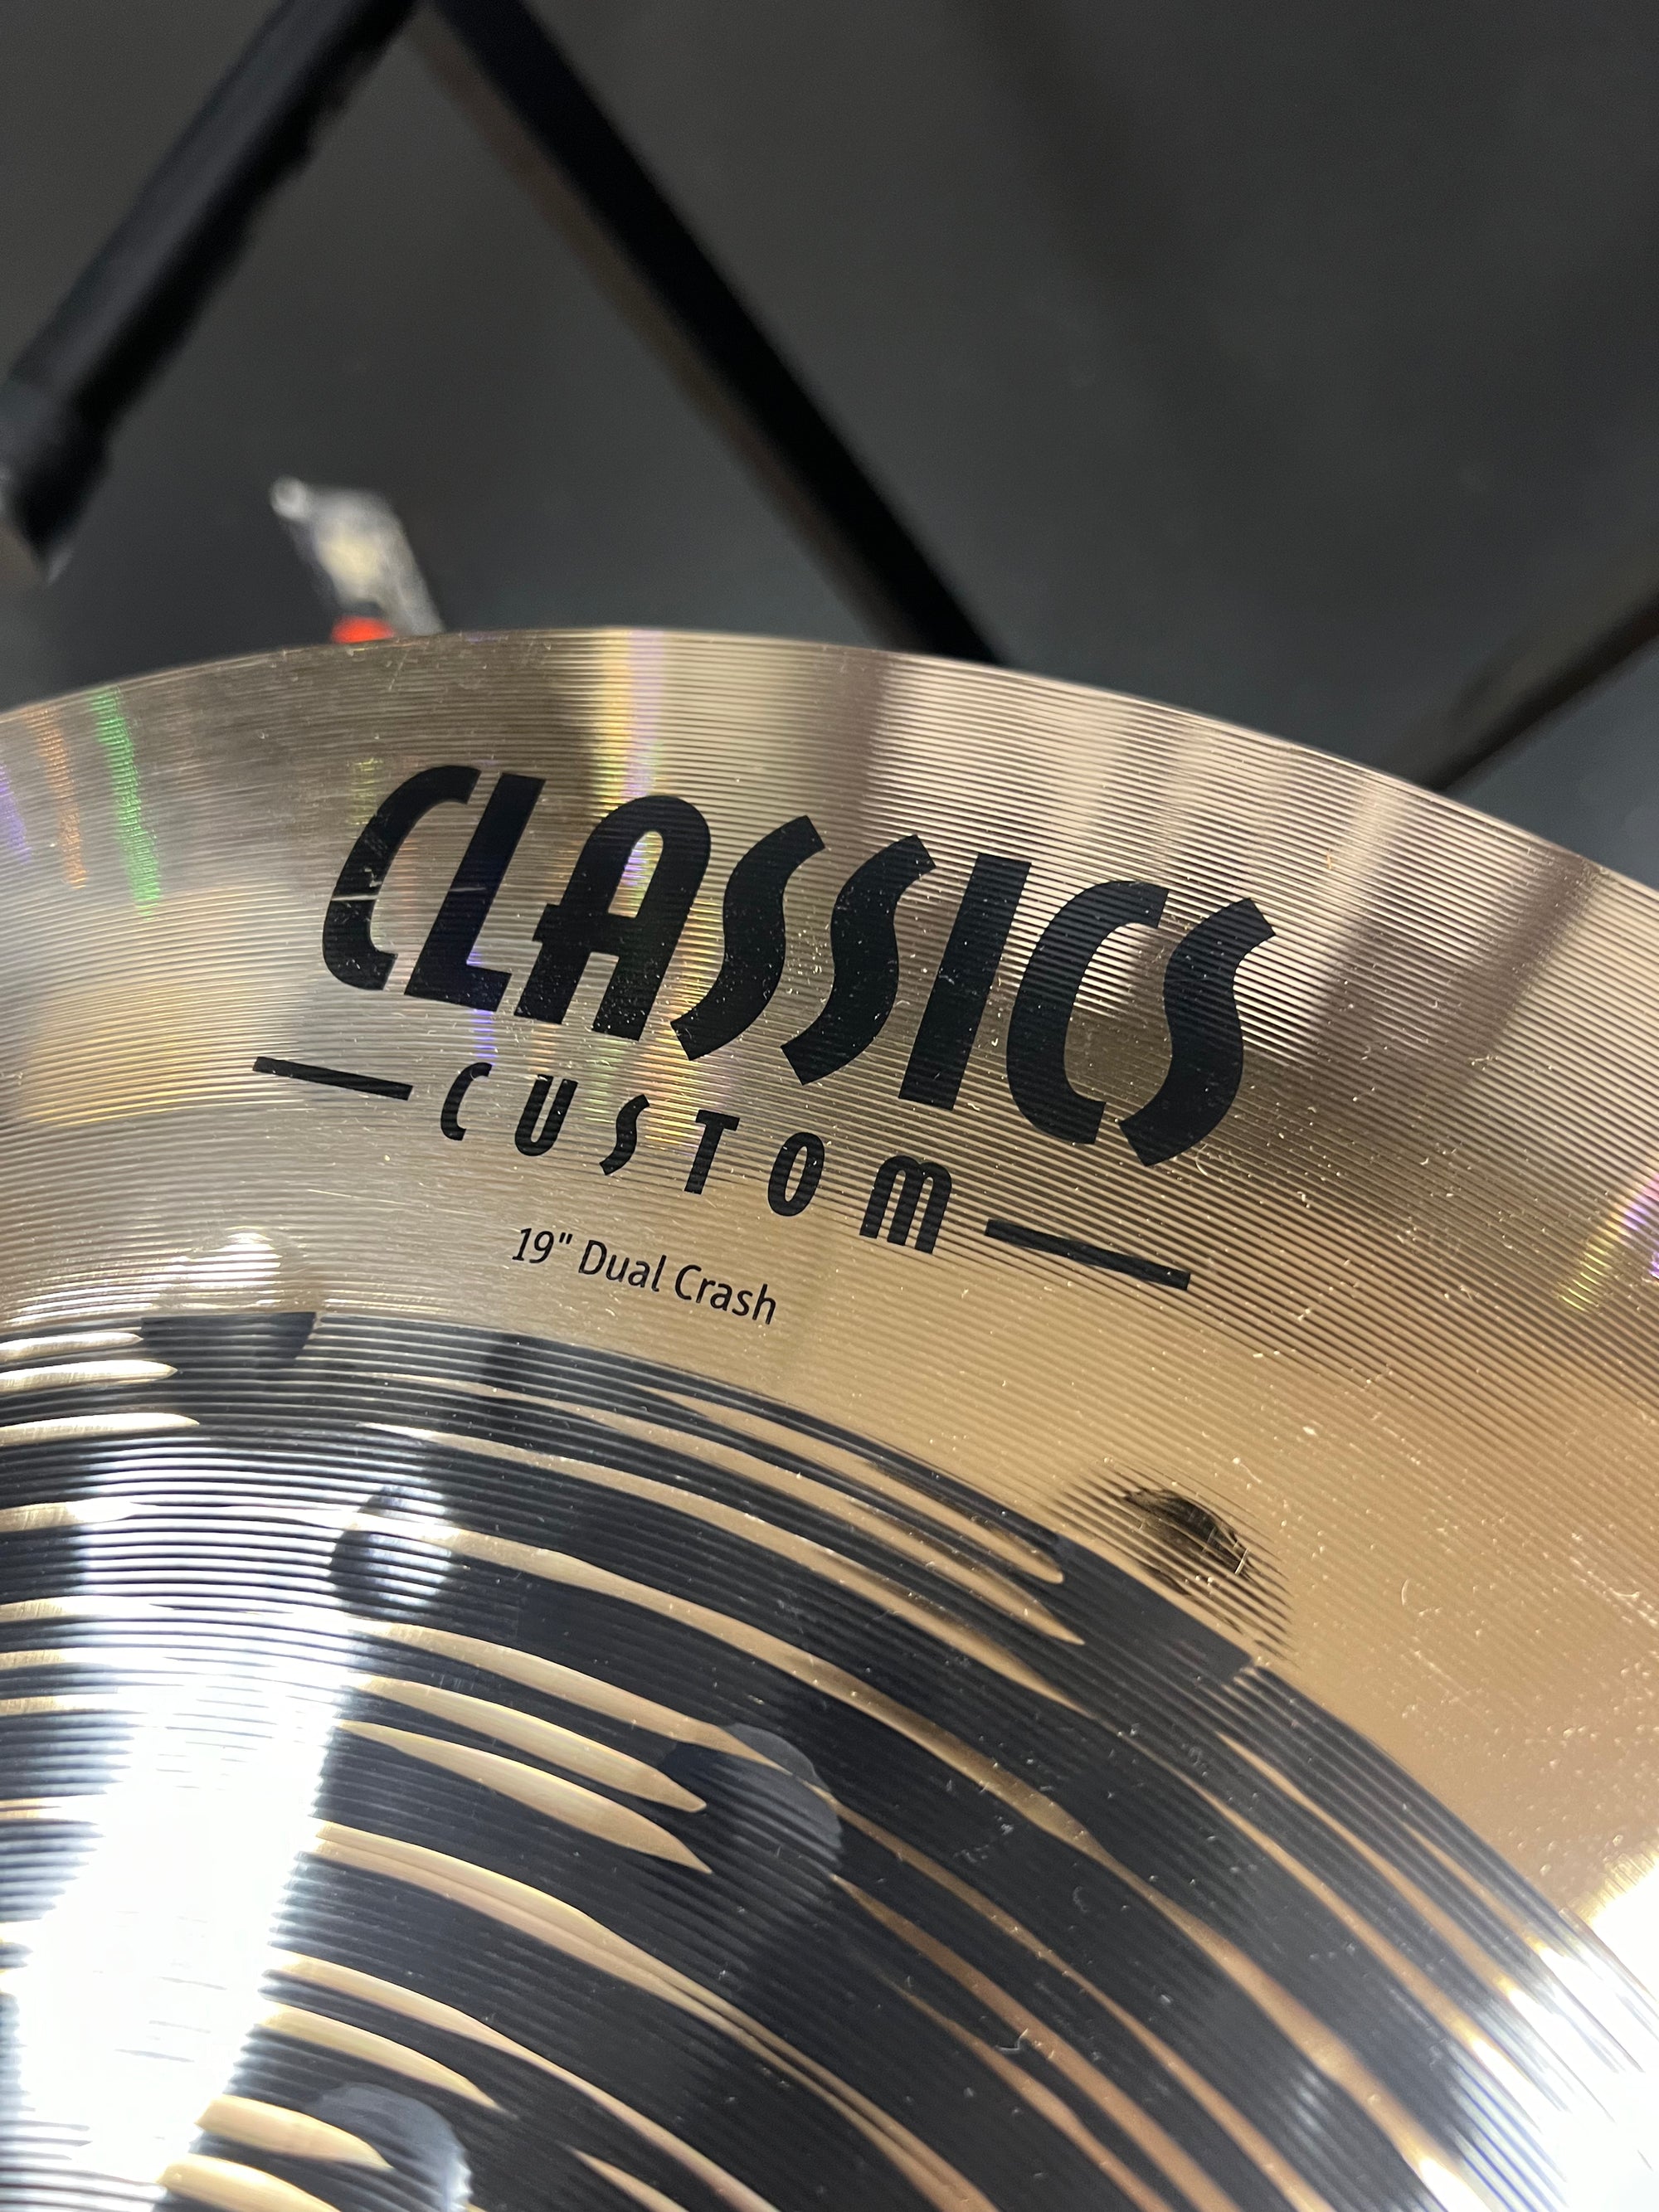 Meinl 19” Dual Crash Cymbal